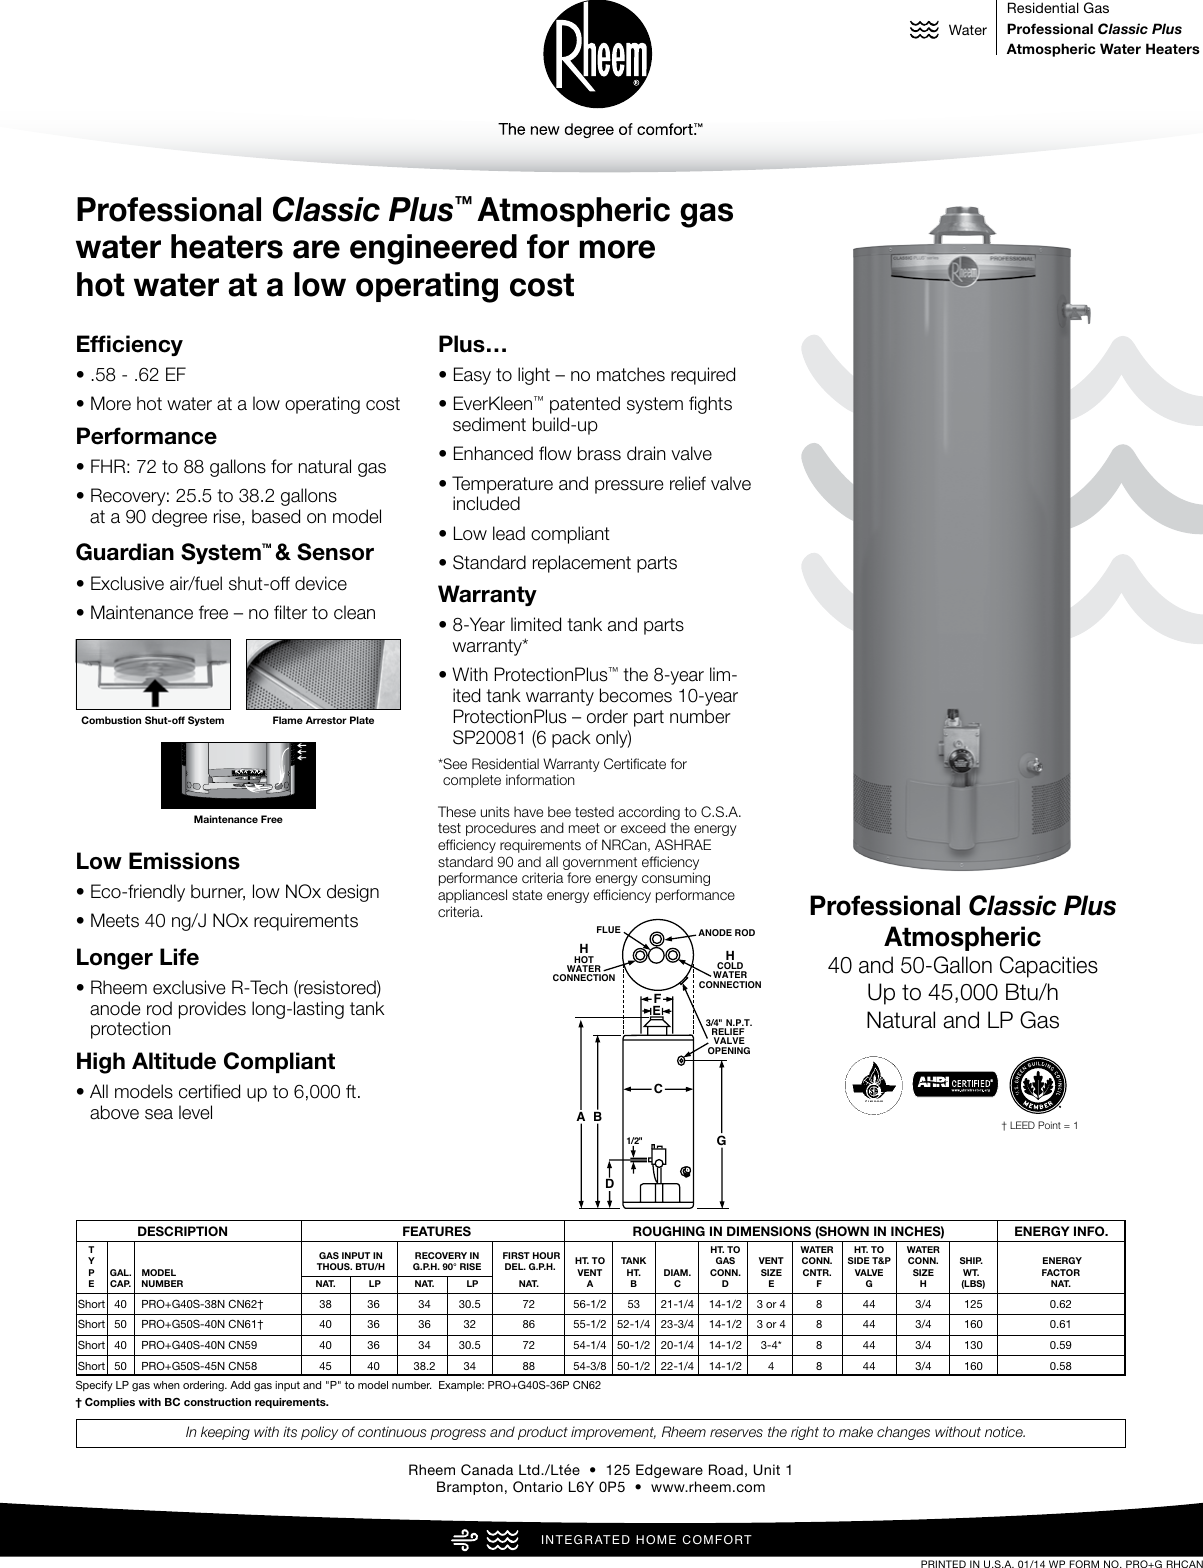 Professional Classic Series Rheem Water Heater User Manual